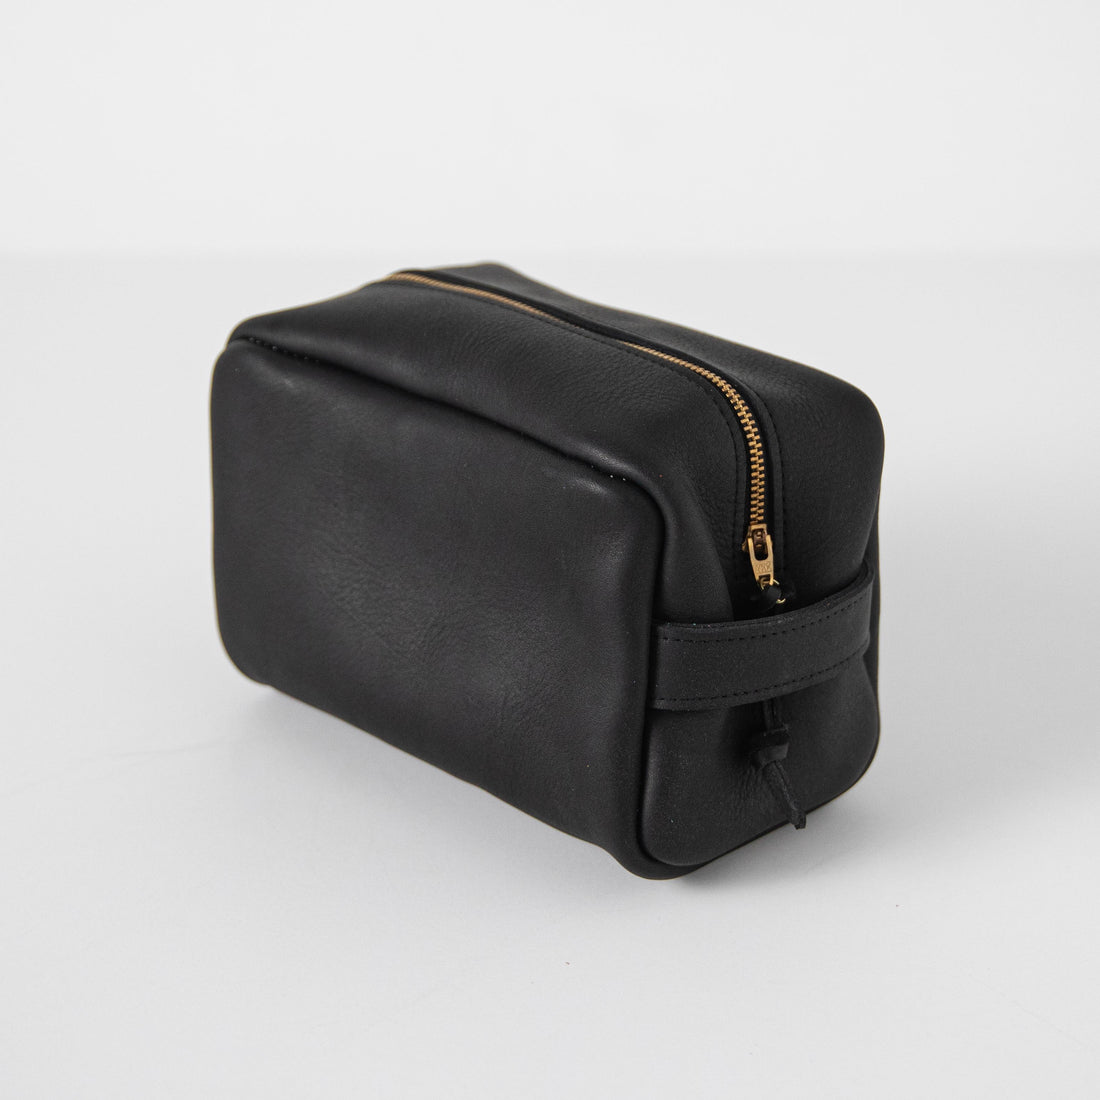 Mens Toiletry Bag: Tan Dopp Kit  leather toiletry bag by KMM & Co.